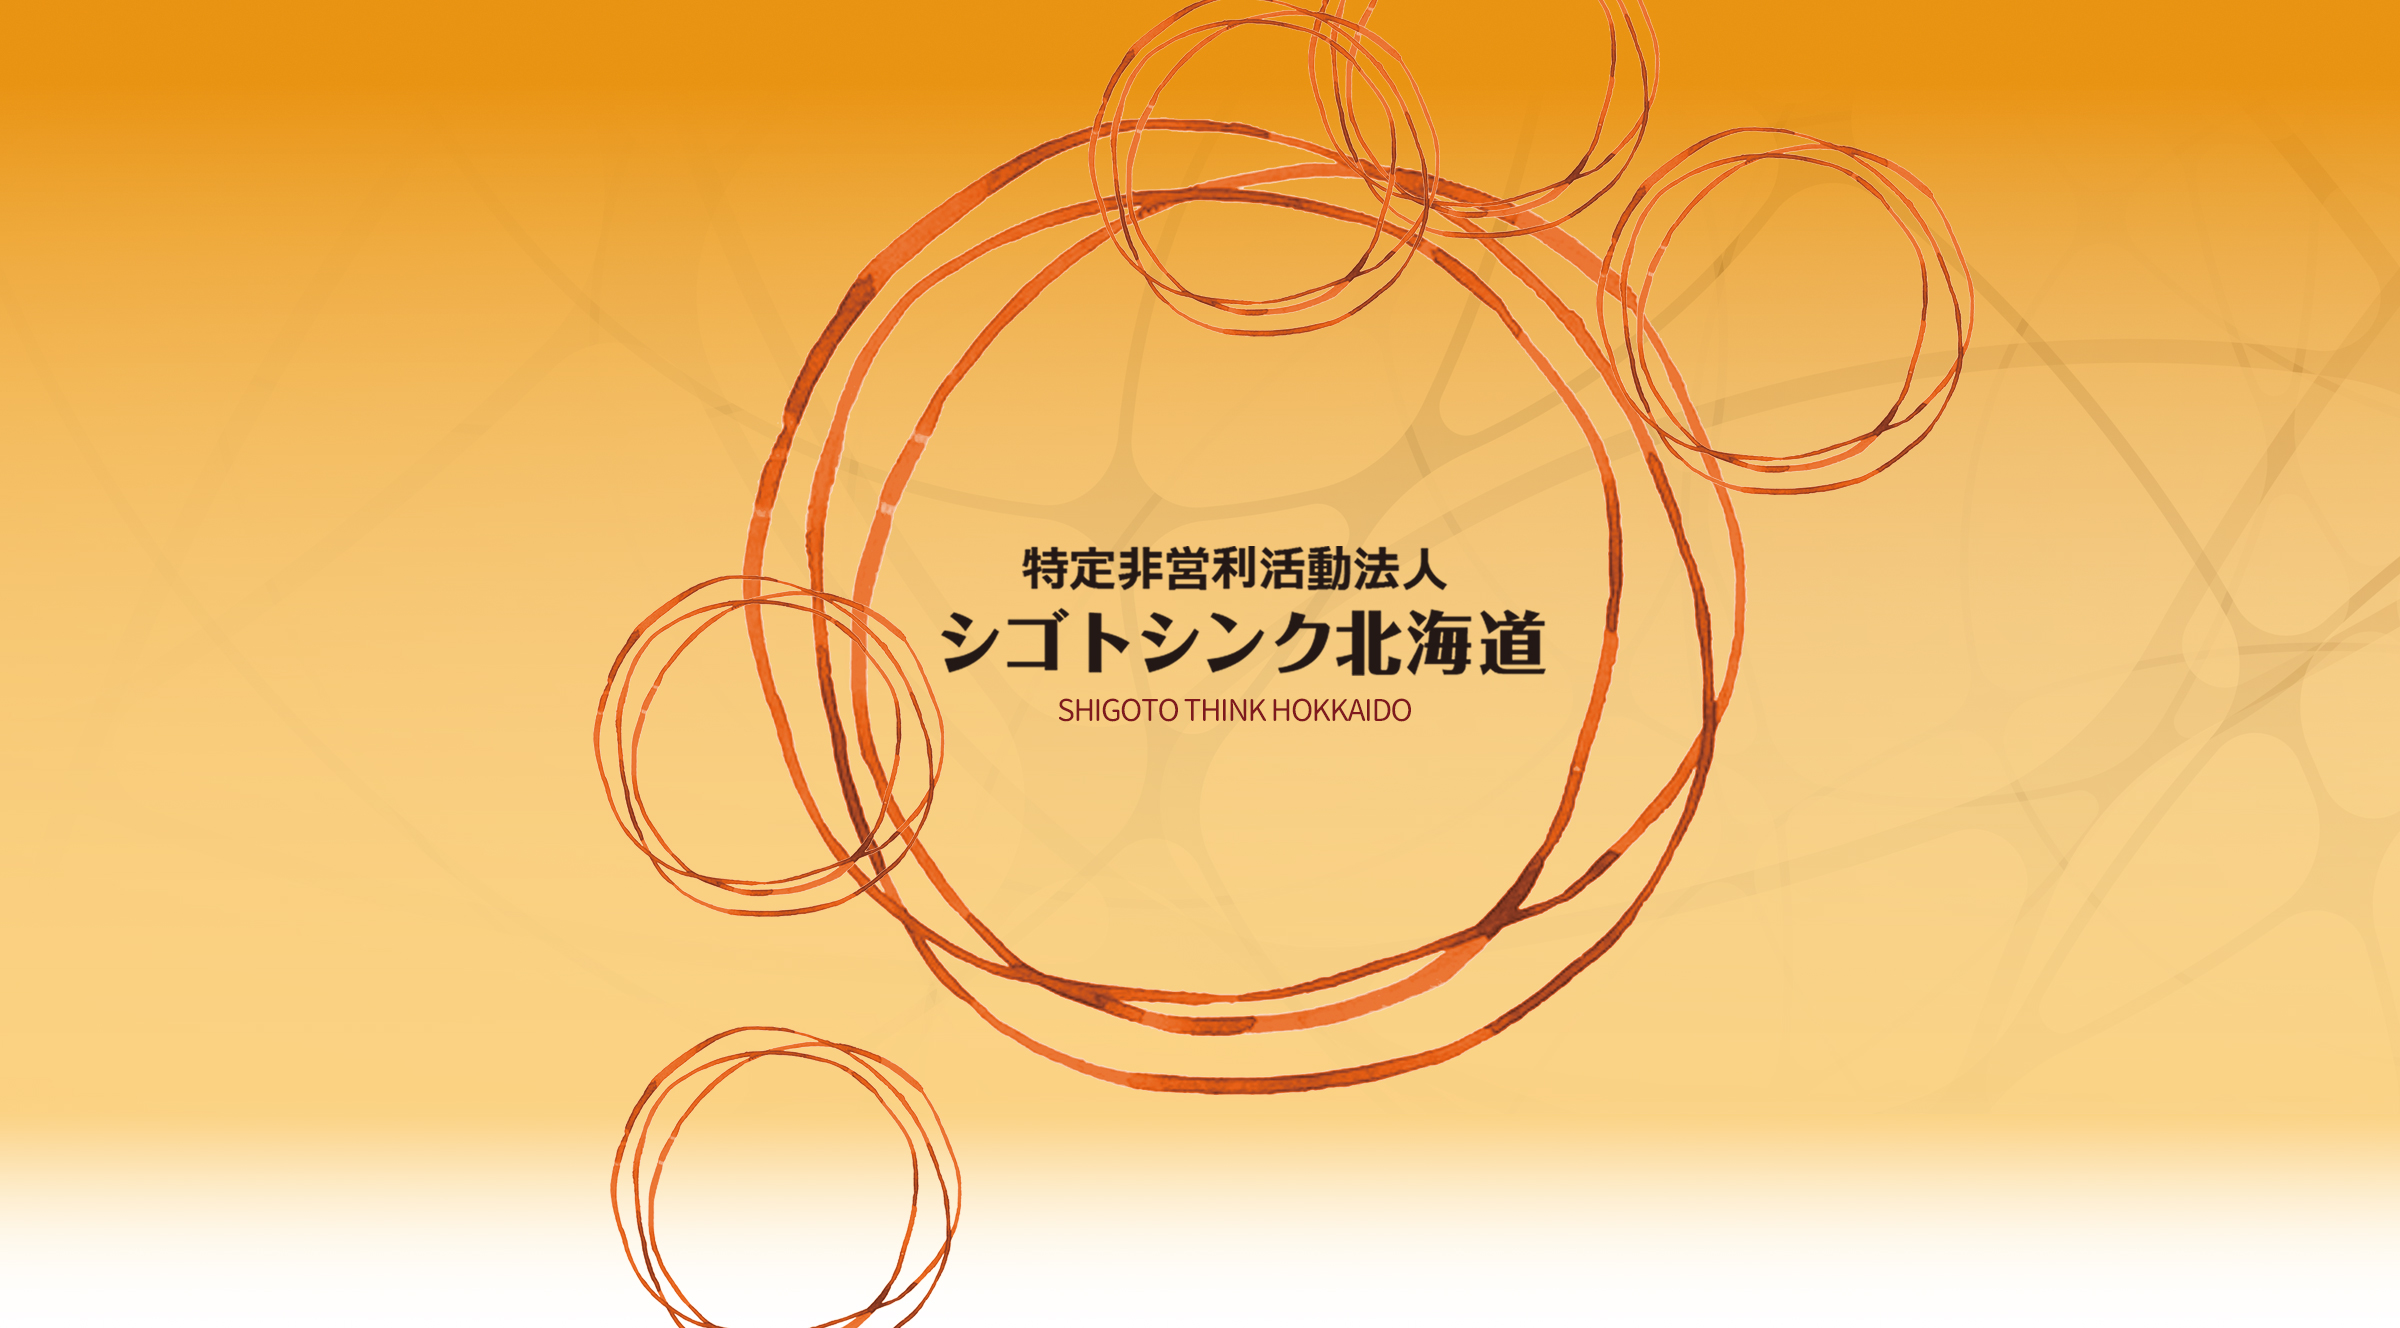 NPO法人名「シゴトシンク北海道」と表示されたオレンジ色の表紙